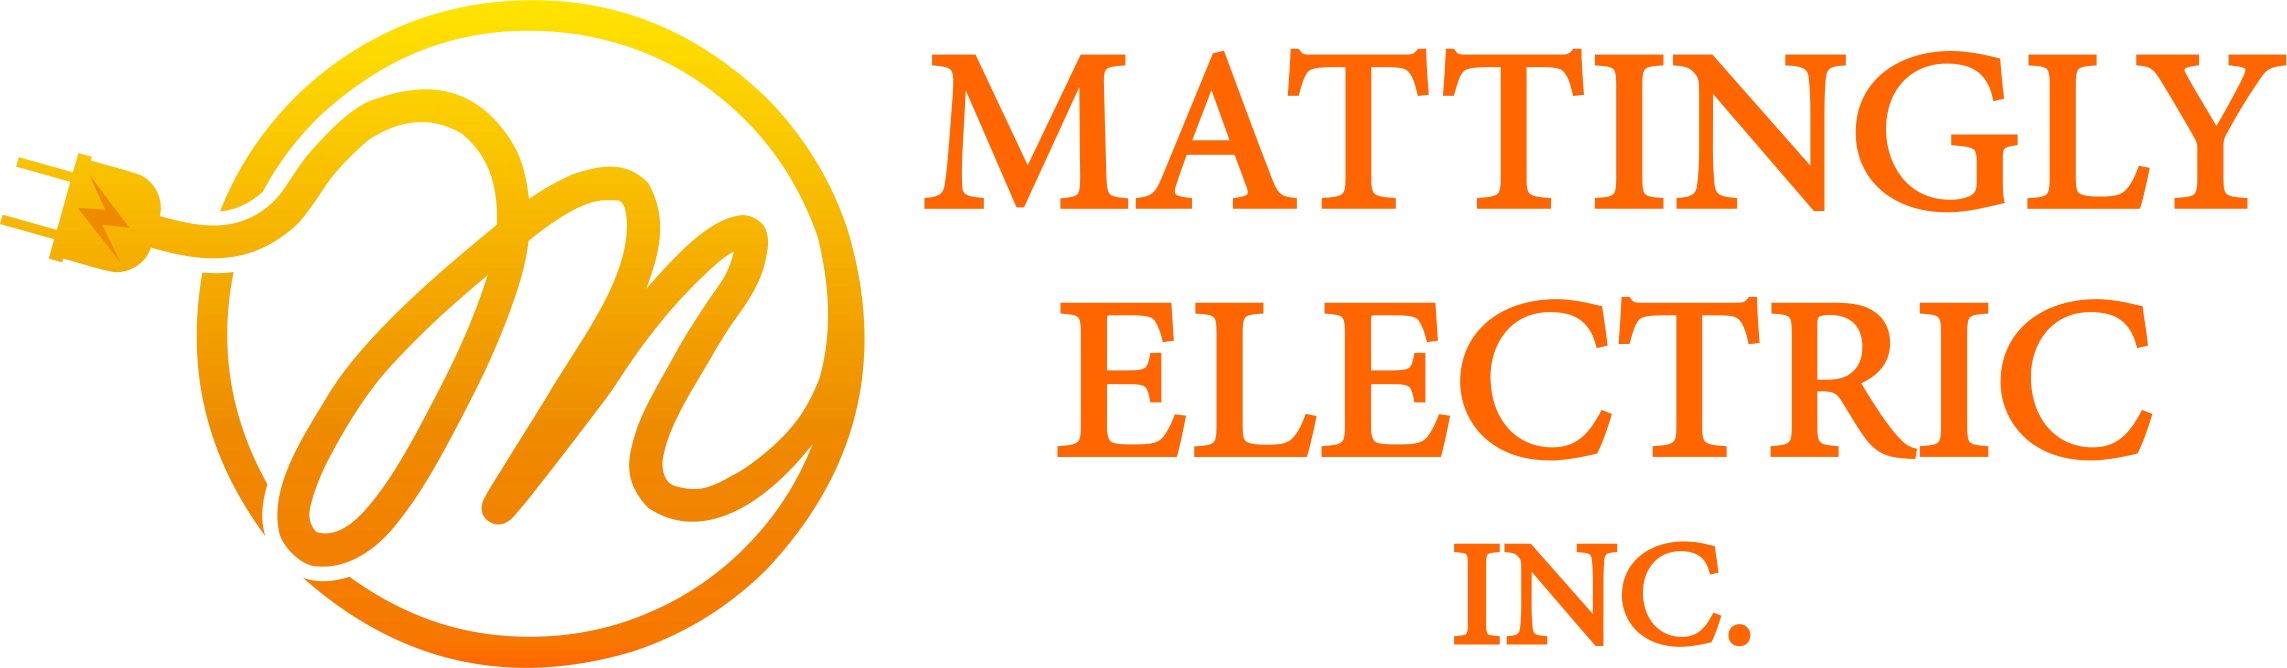 Mattingly Electric Inc Logo